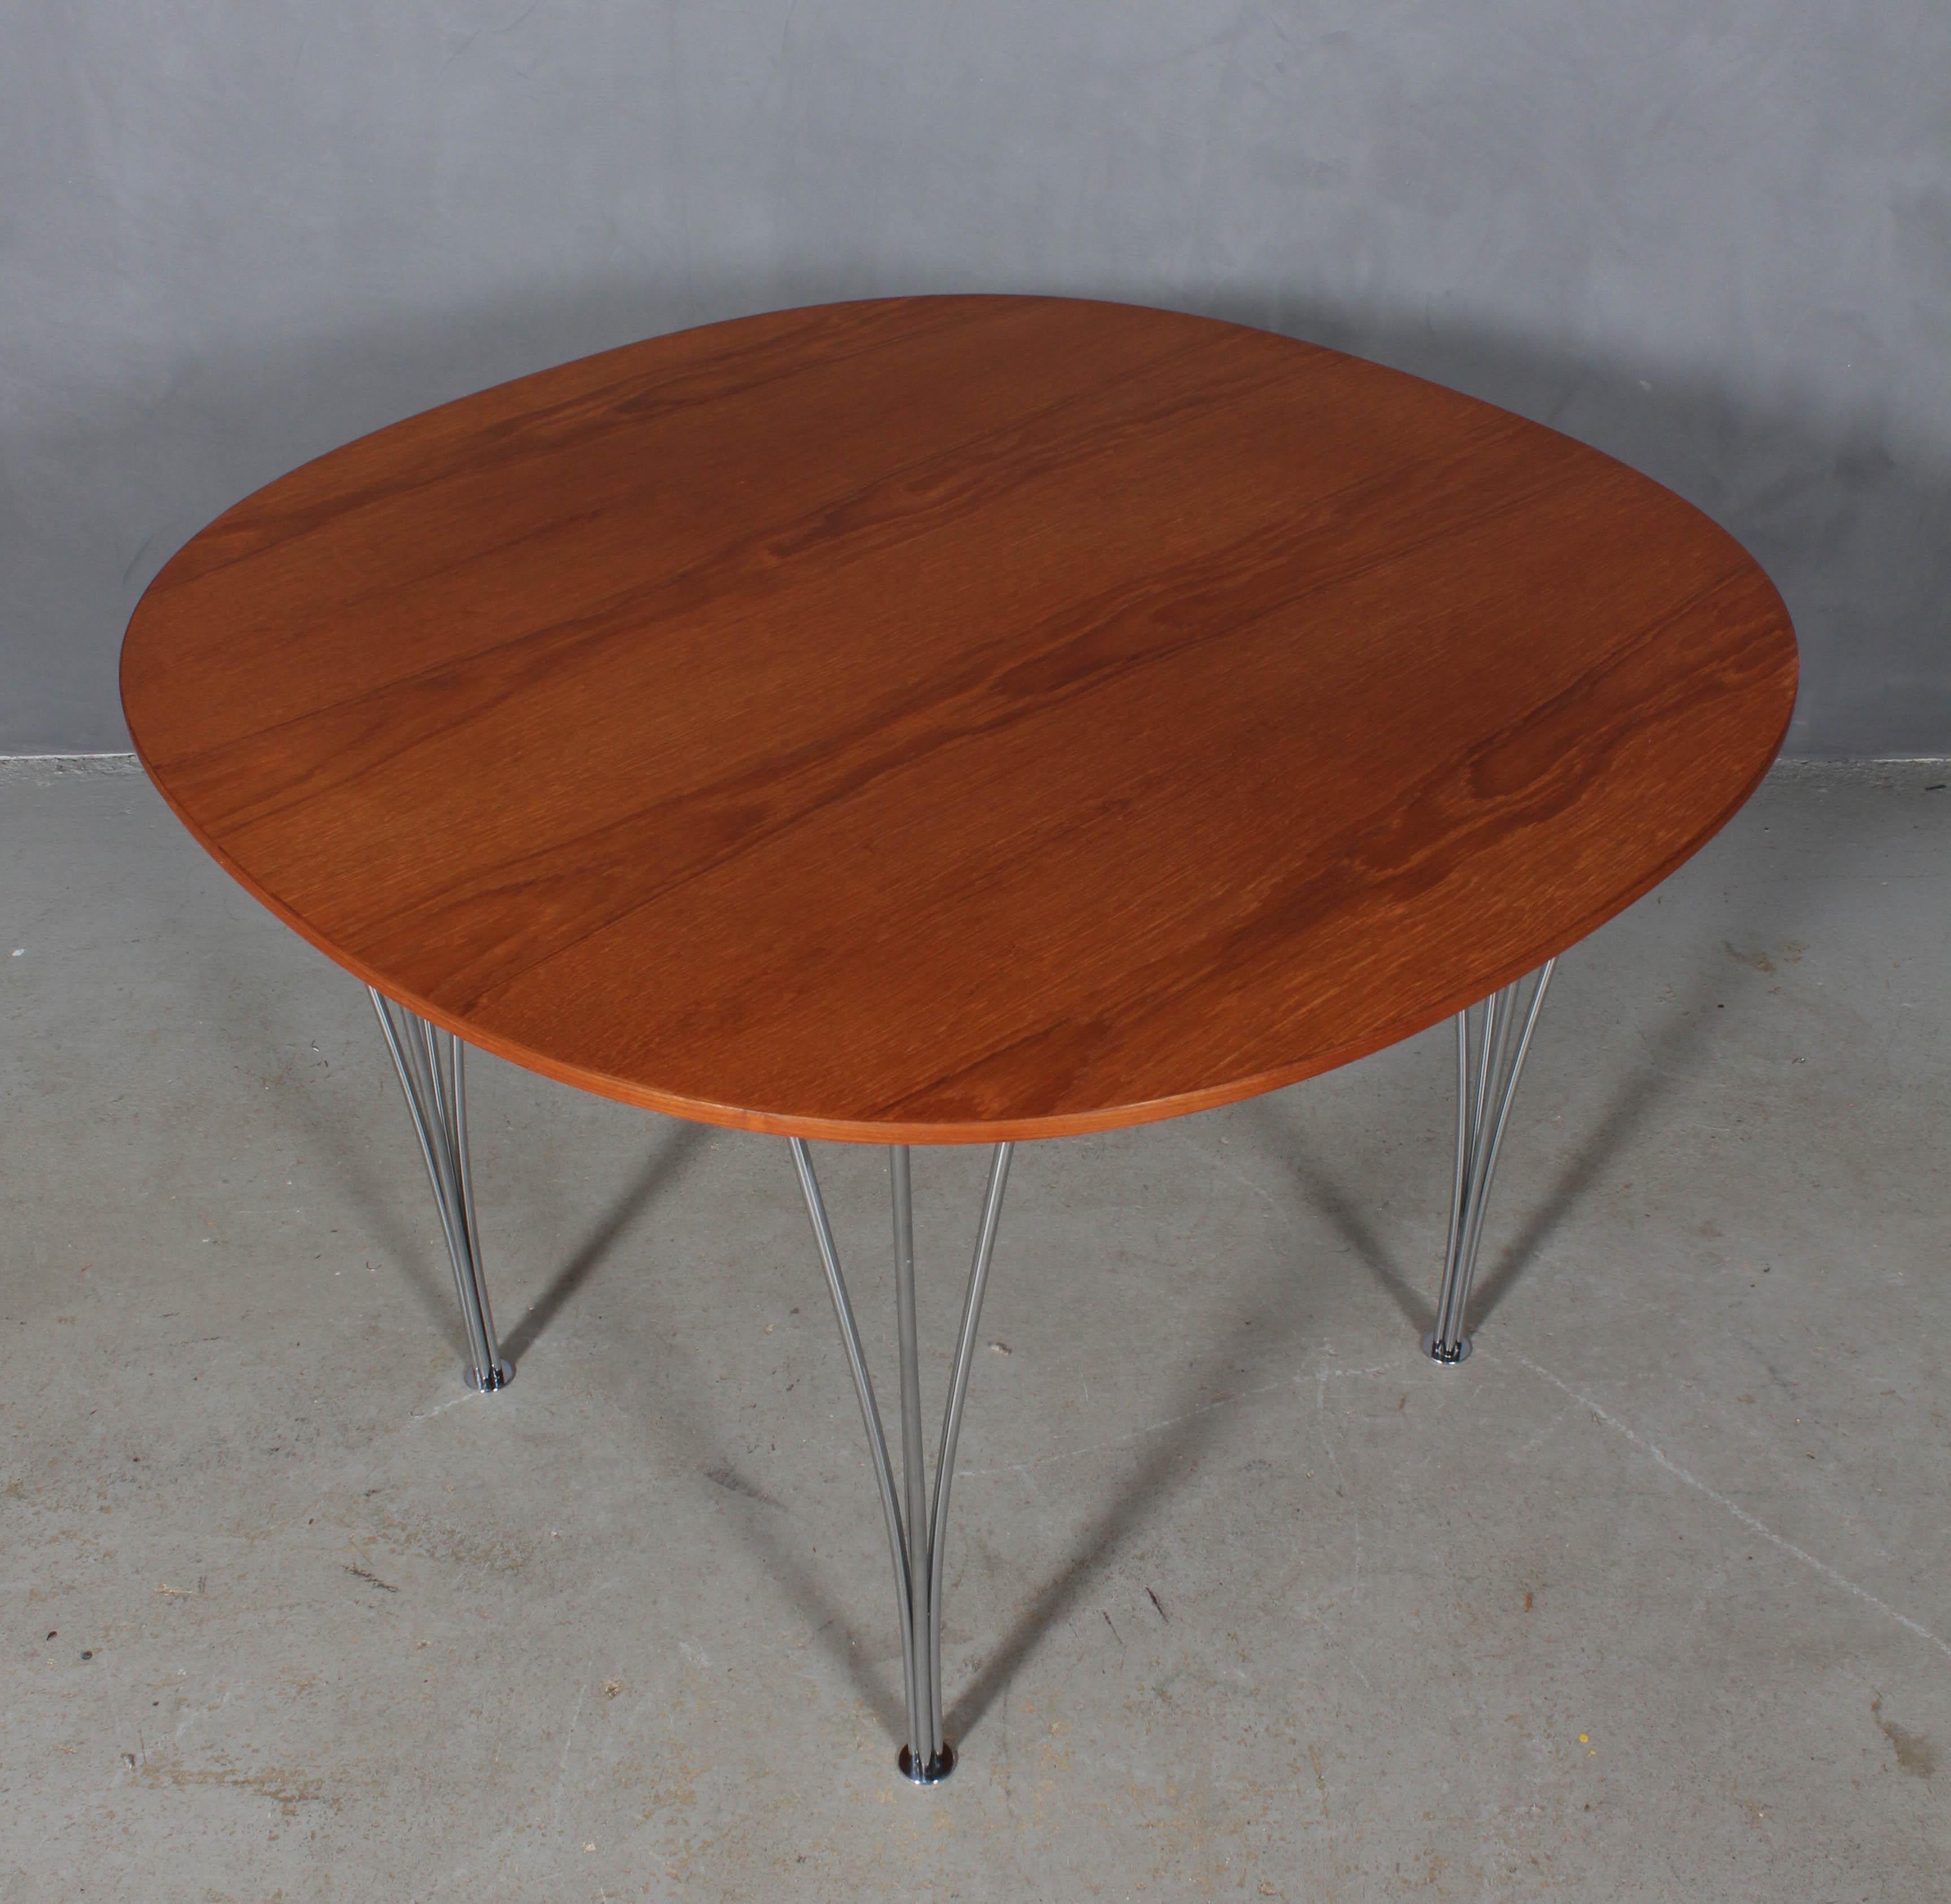 Piet Hein & Arne Jacobsen café table with plate of veneered teak.

Legs of chromed steel.

Made by Fritz Hansen.